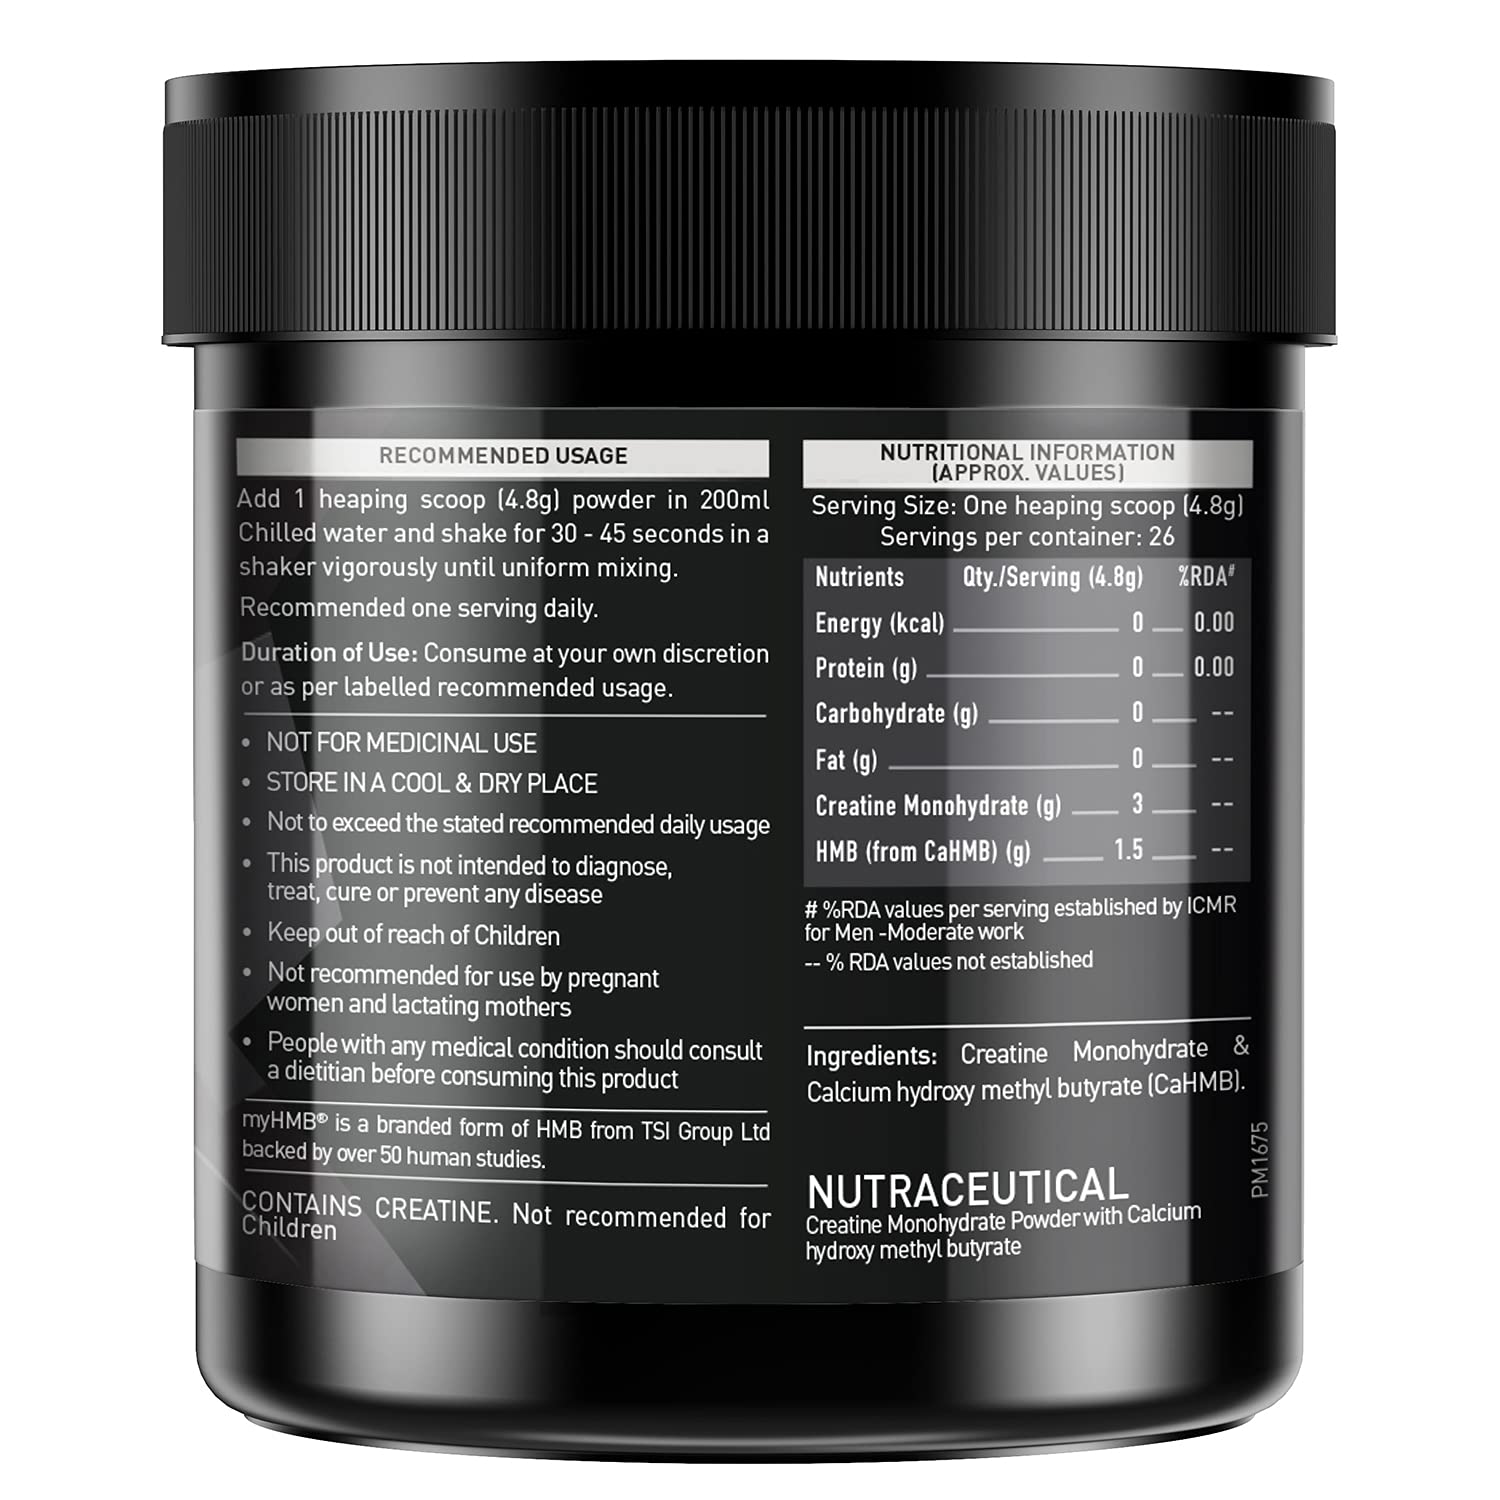 MuscleBlaze Creatine HMB Powder 125 gm (26 Servings)